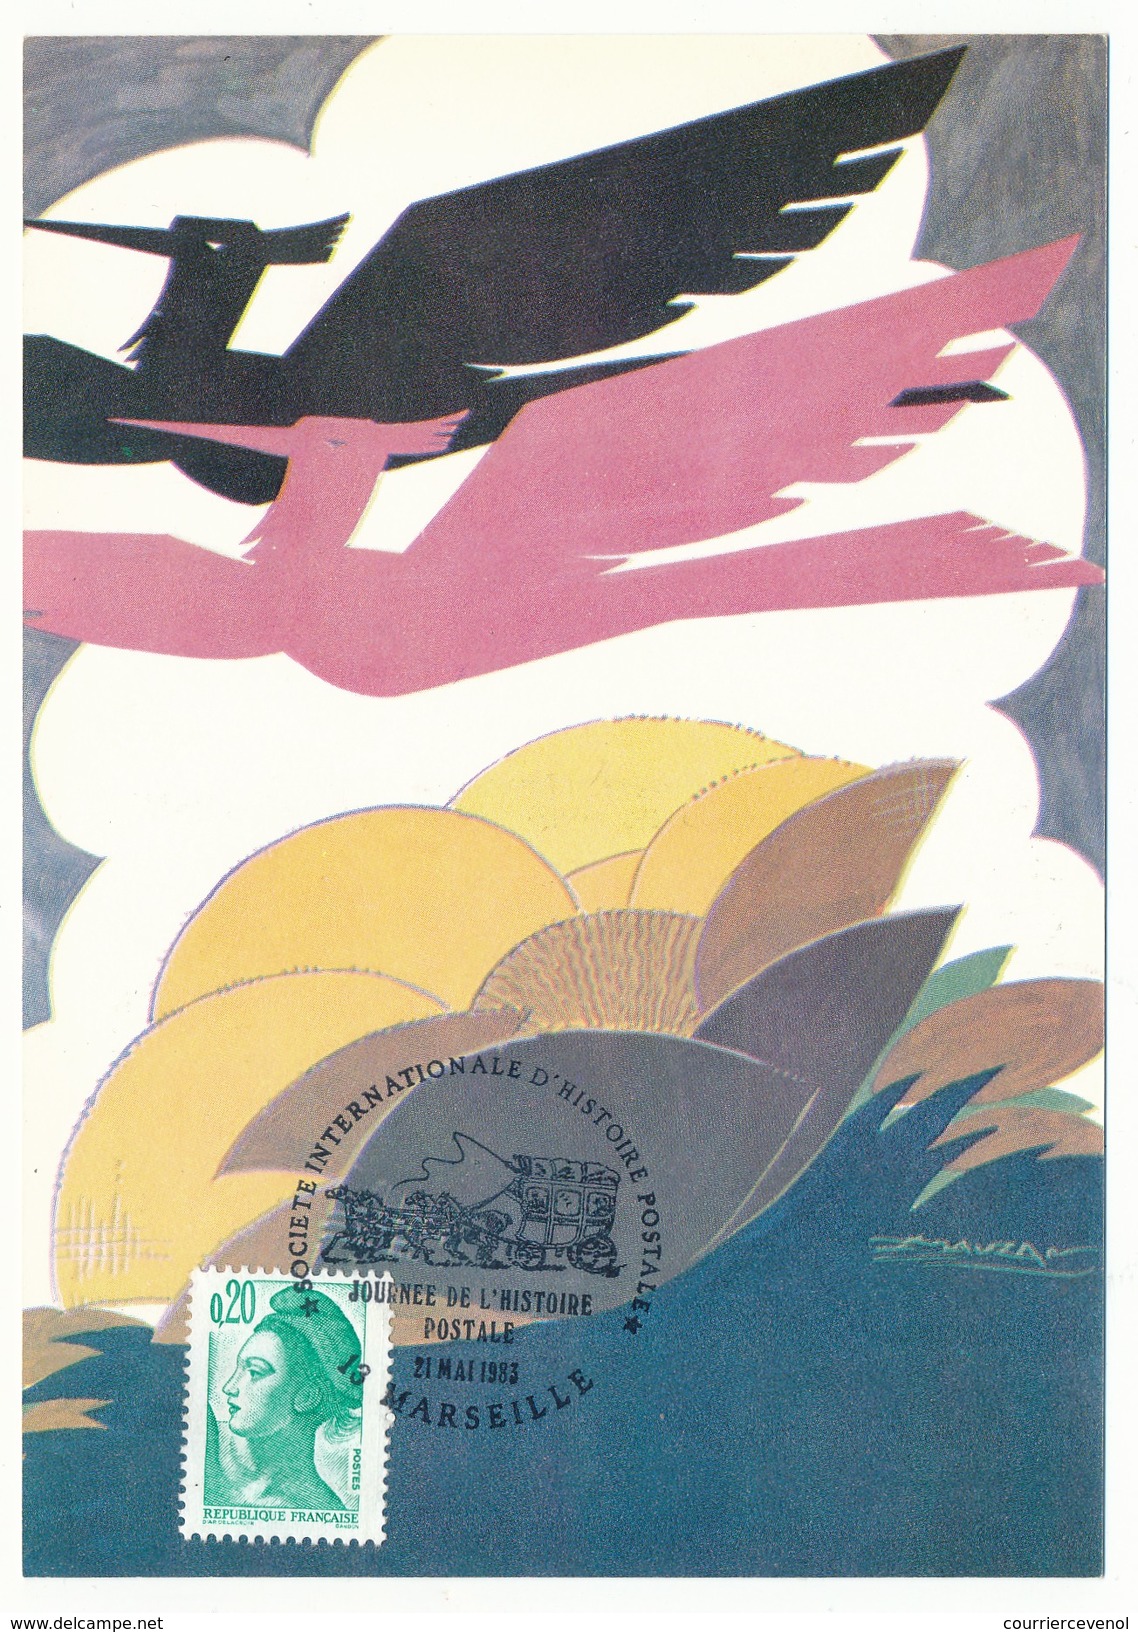 FRANCE => Carte Postale Affiche De Mauzan - Obli Temporaire "Journée De L'histoire Postale" MARSEILLE 21 Mai 1983 - Matasellos Conmemorativos